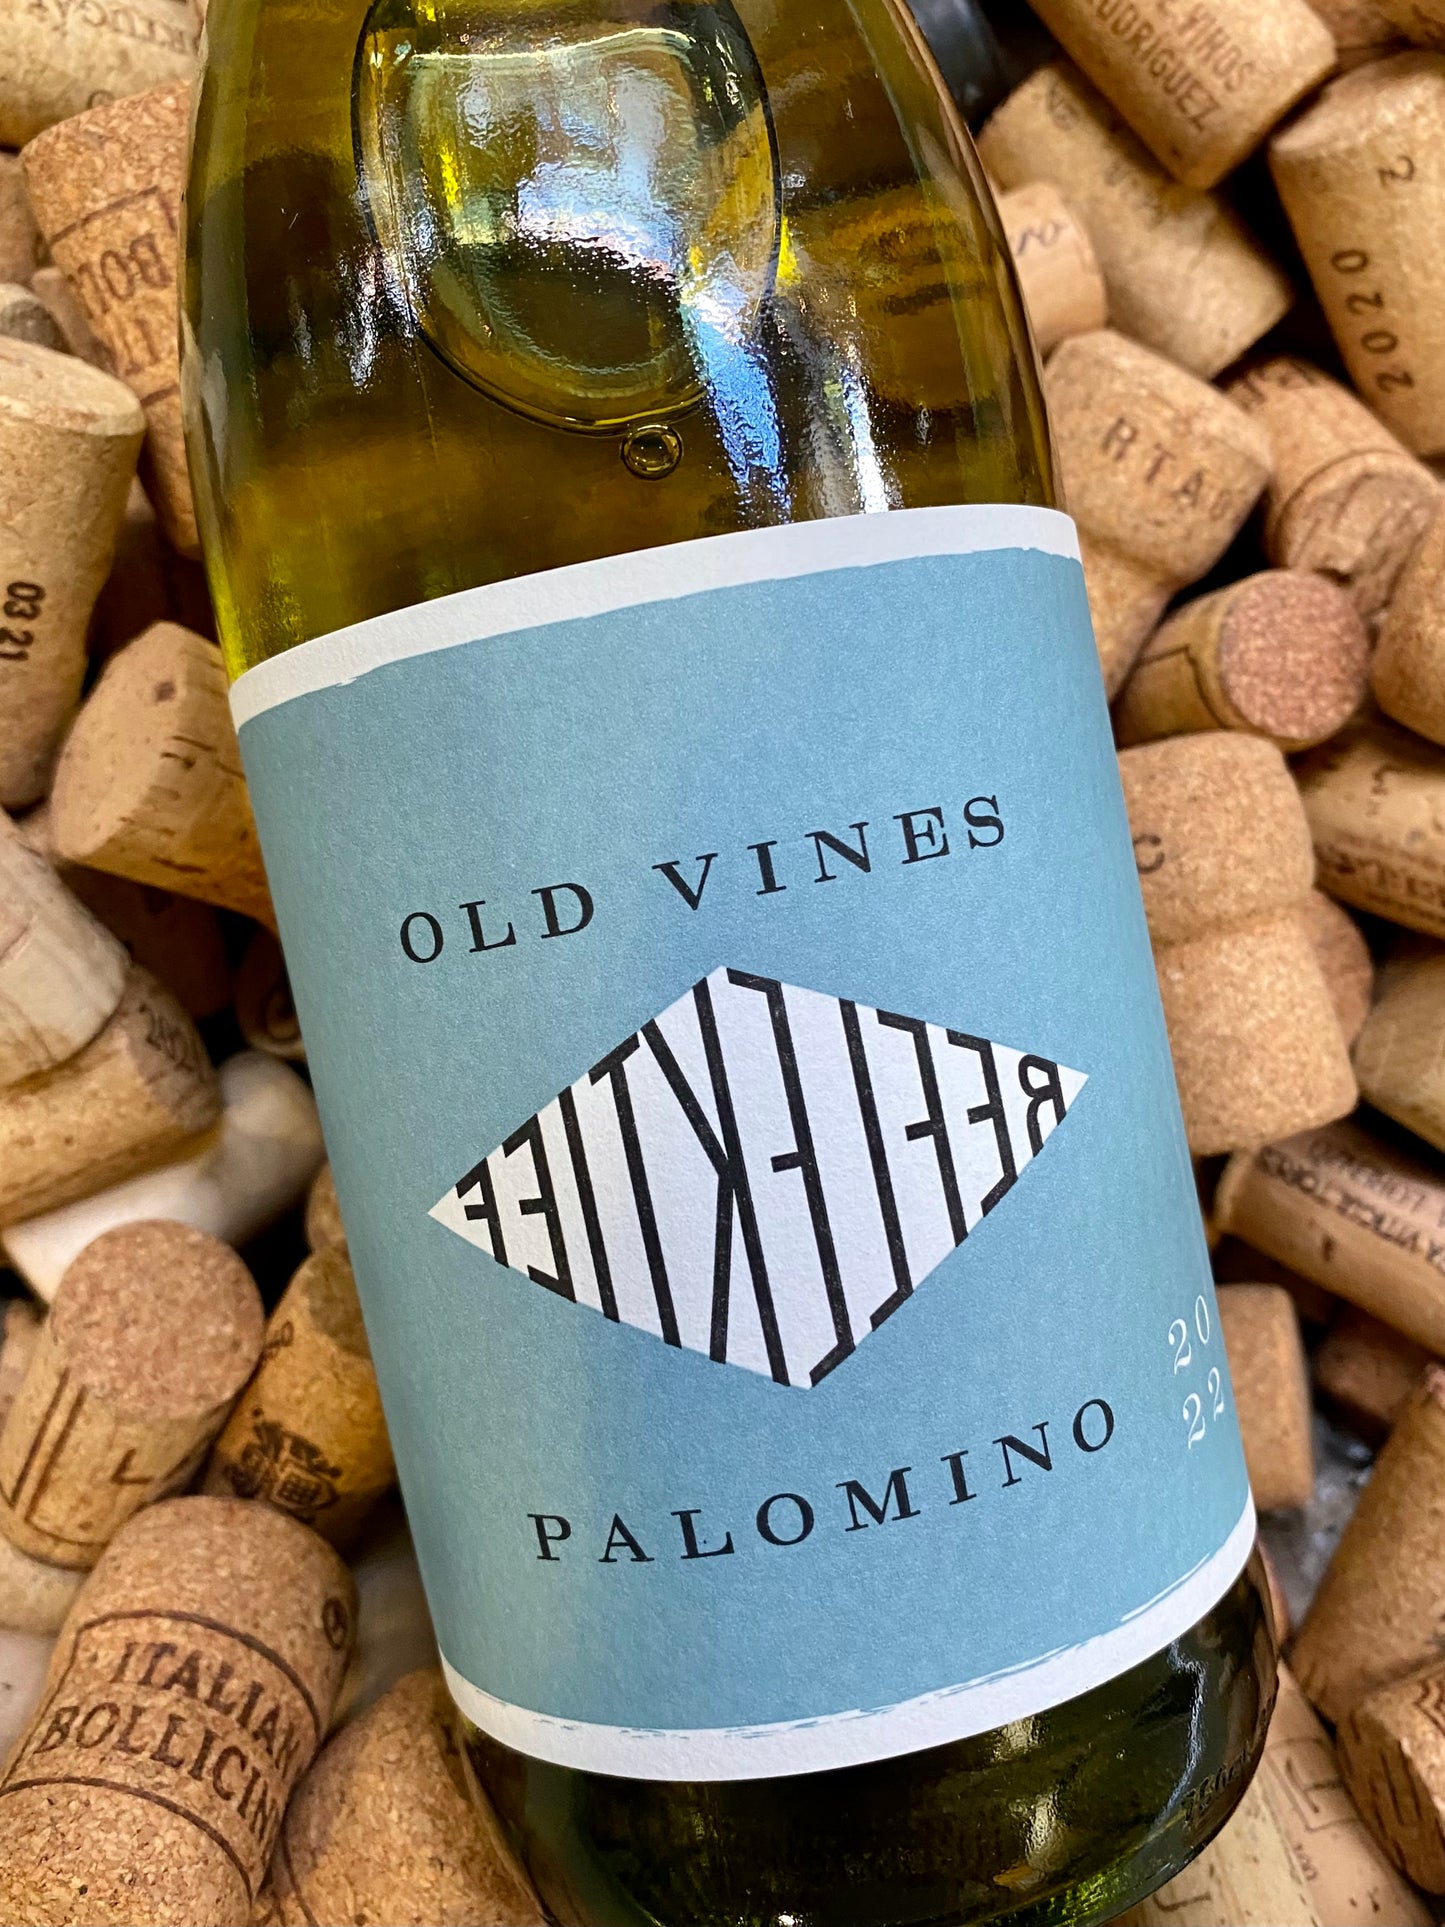 Reflektief Palomino Old Vines